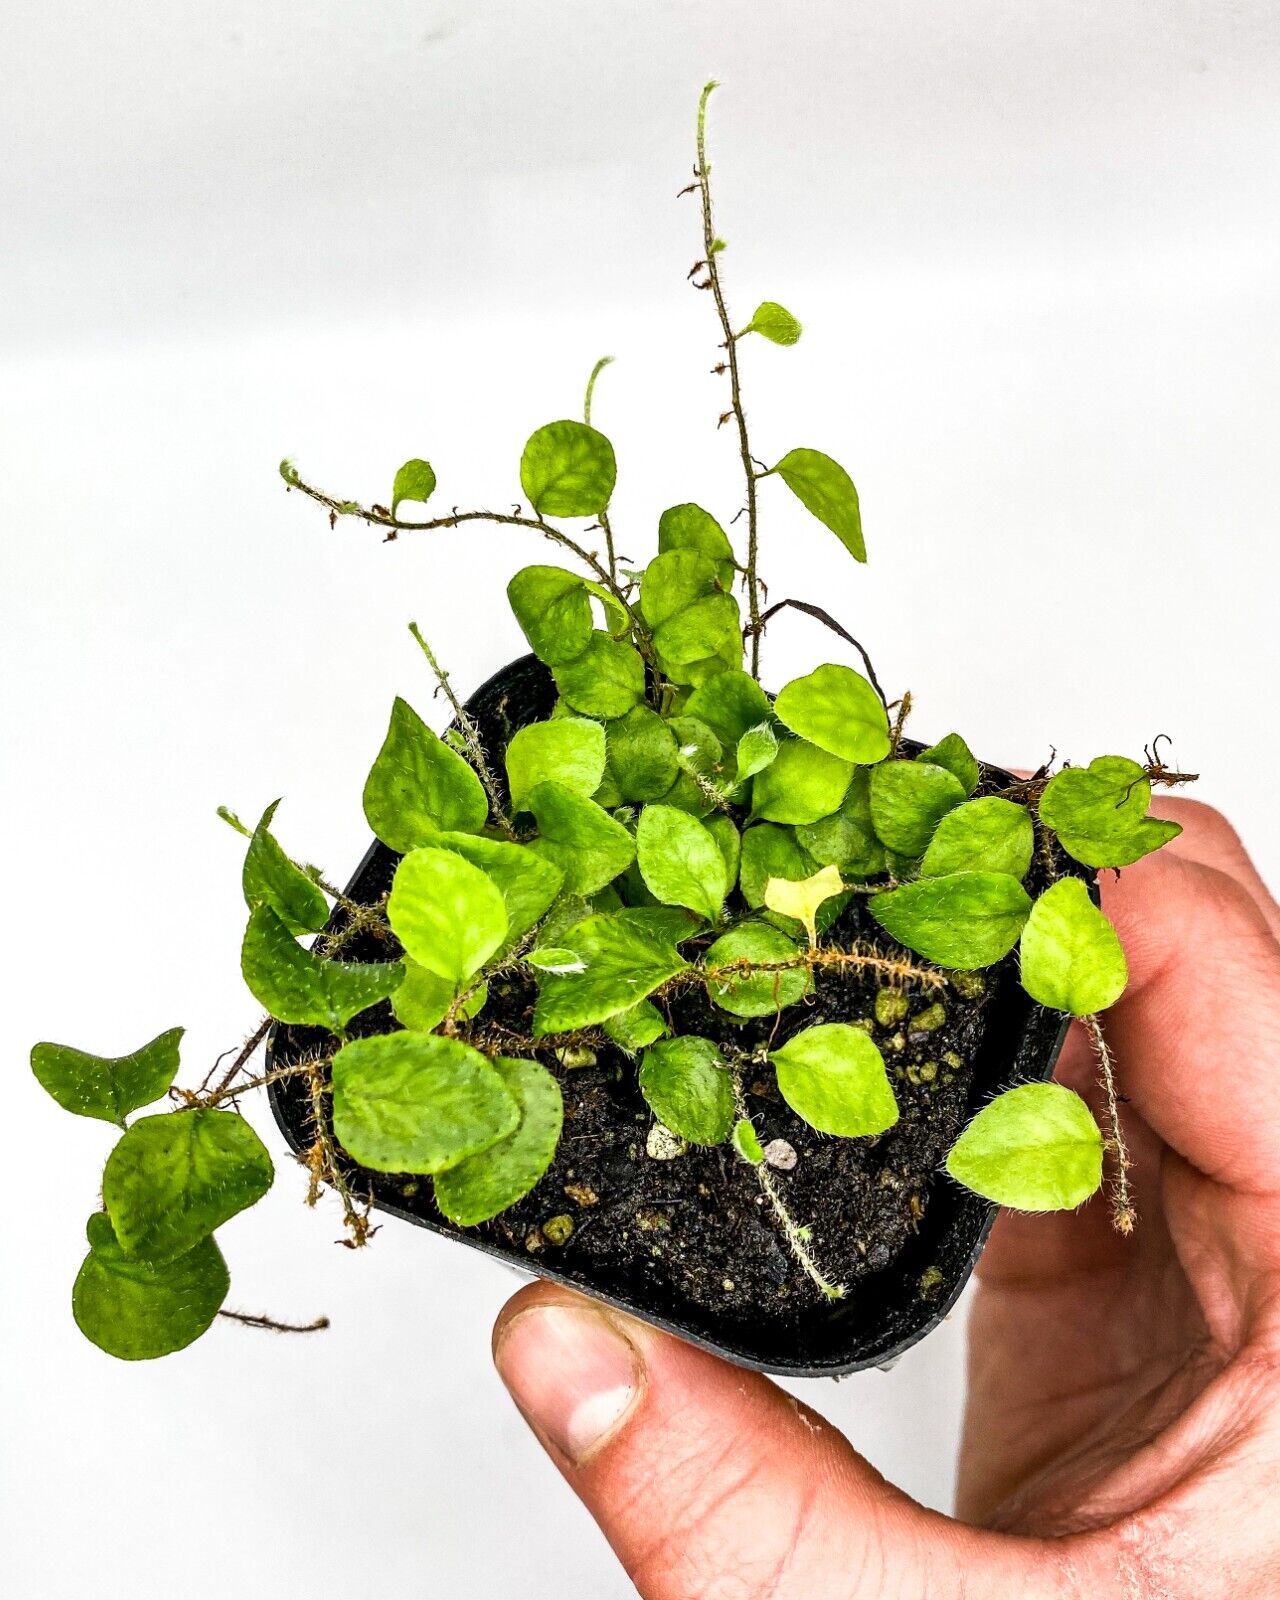 Microgramma tecta (2.5" Pot) Miniature Epiphytic Fern /Dart Frog Terrarium Plant Creation Cultivated Microgramma tecta - фотография #7